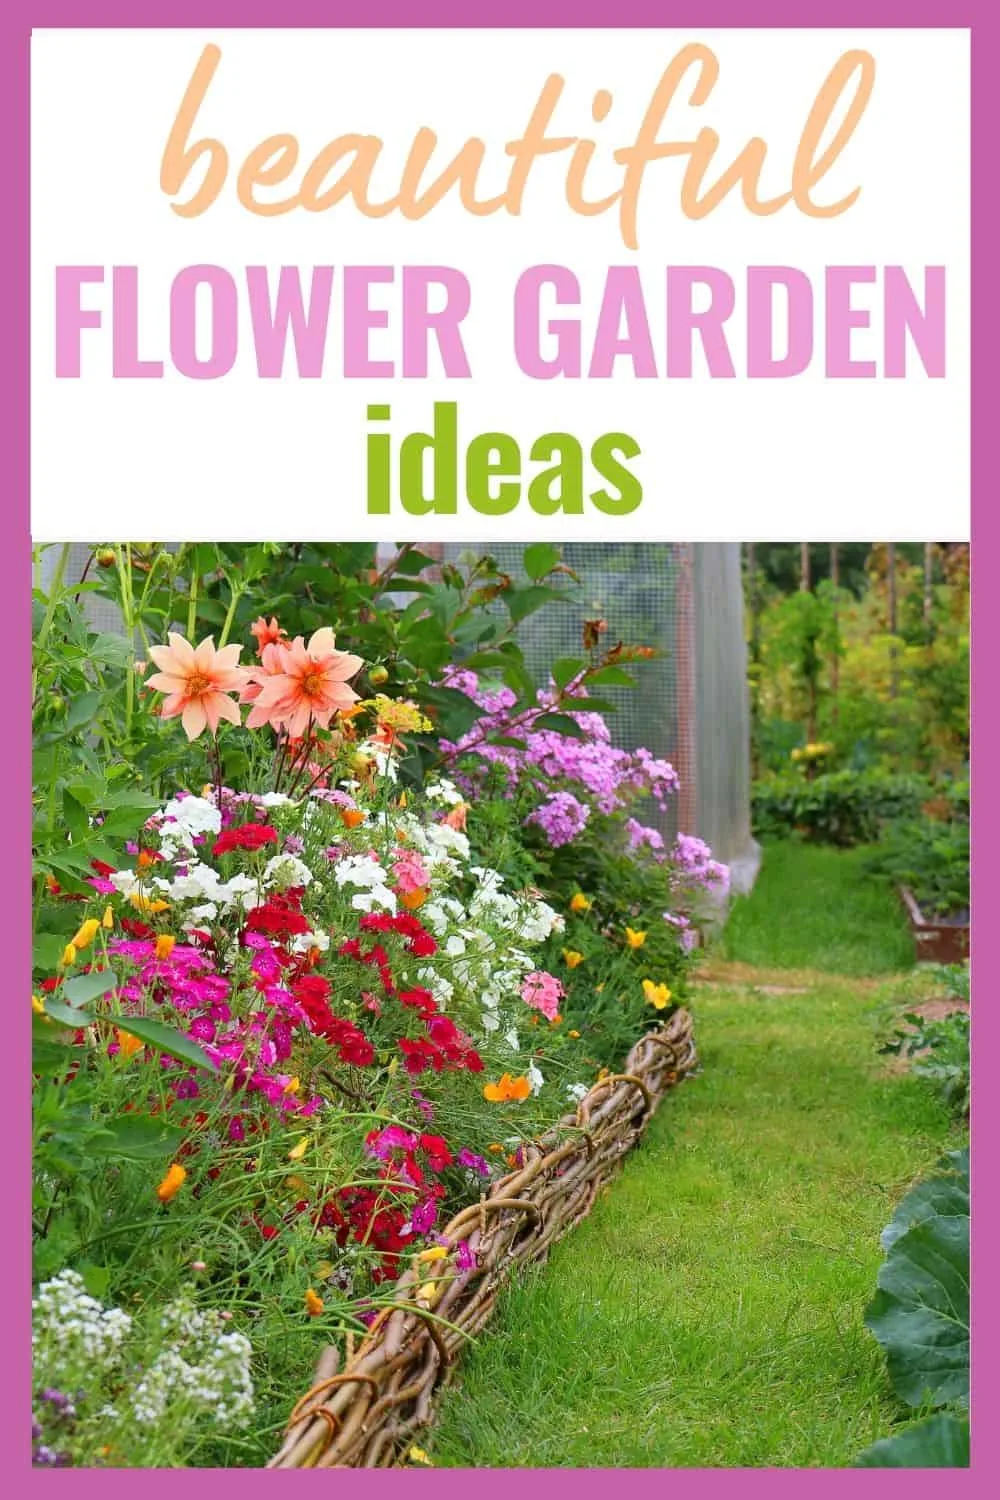 Beautiful flower garden ideas